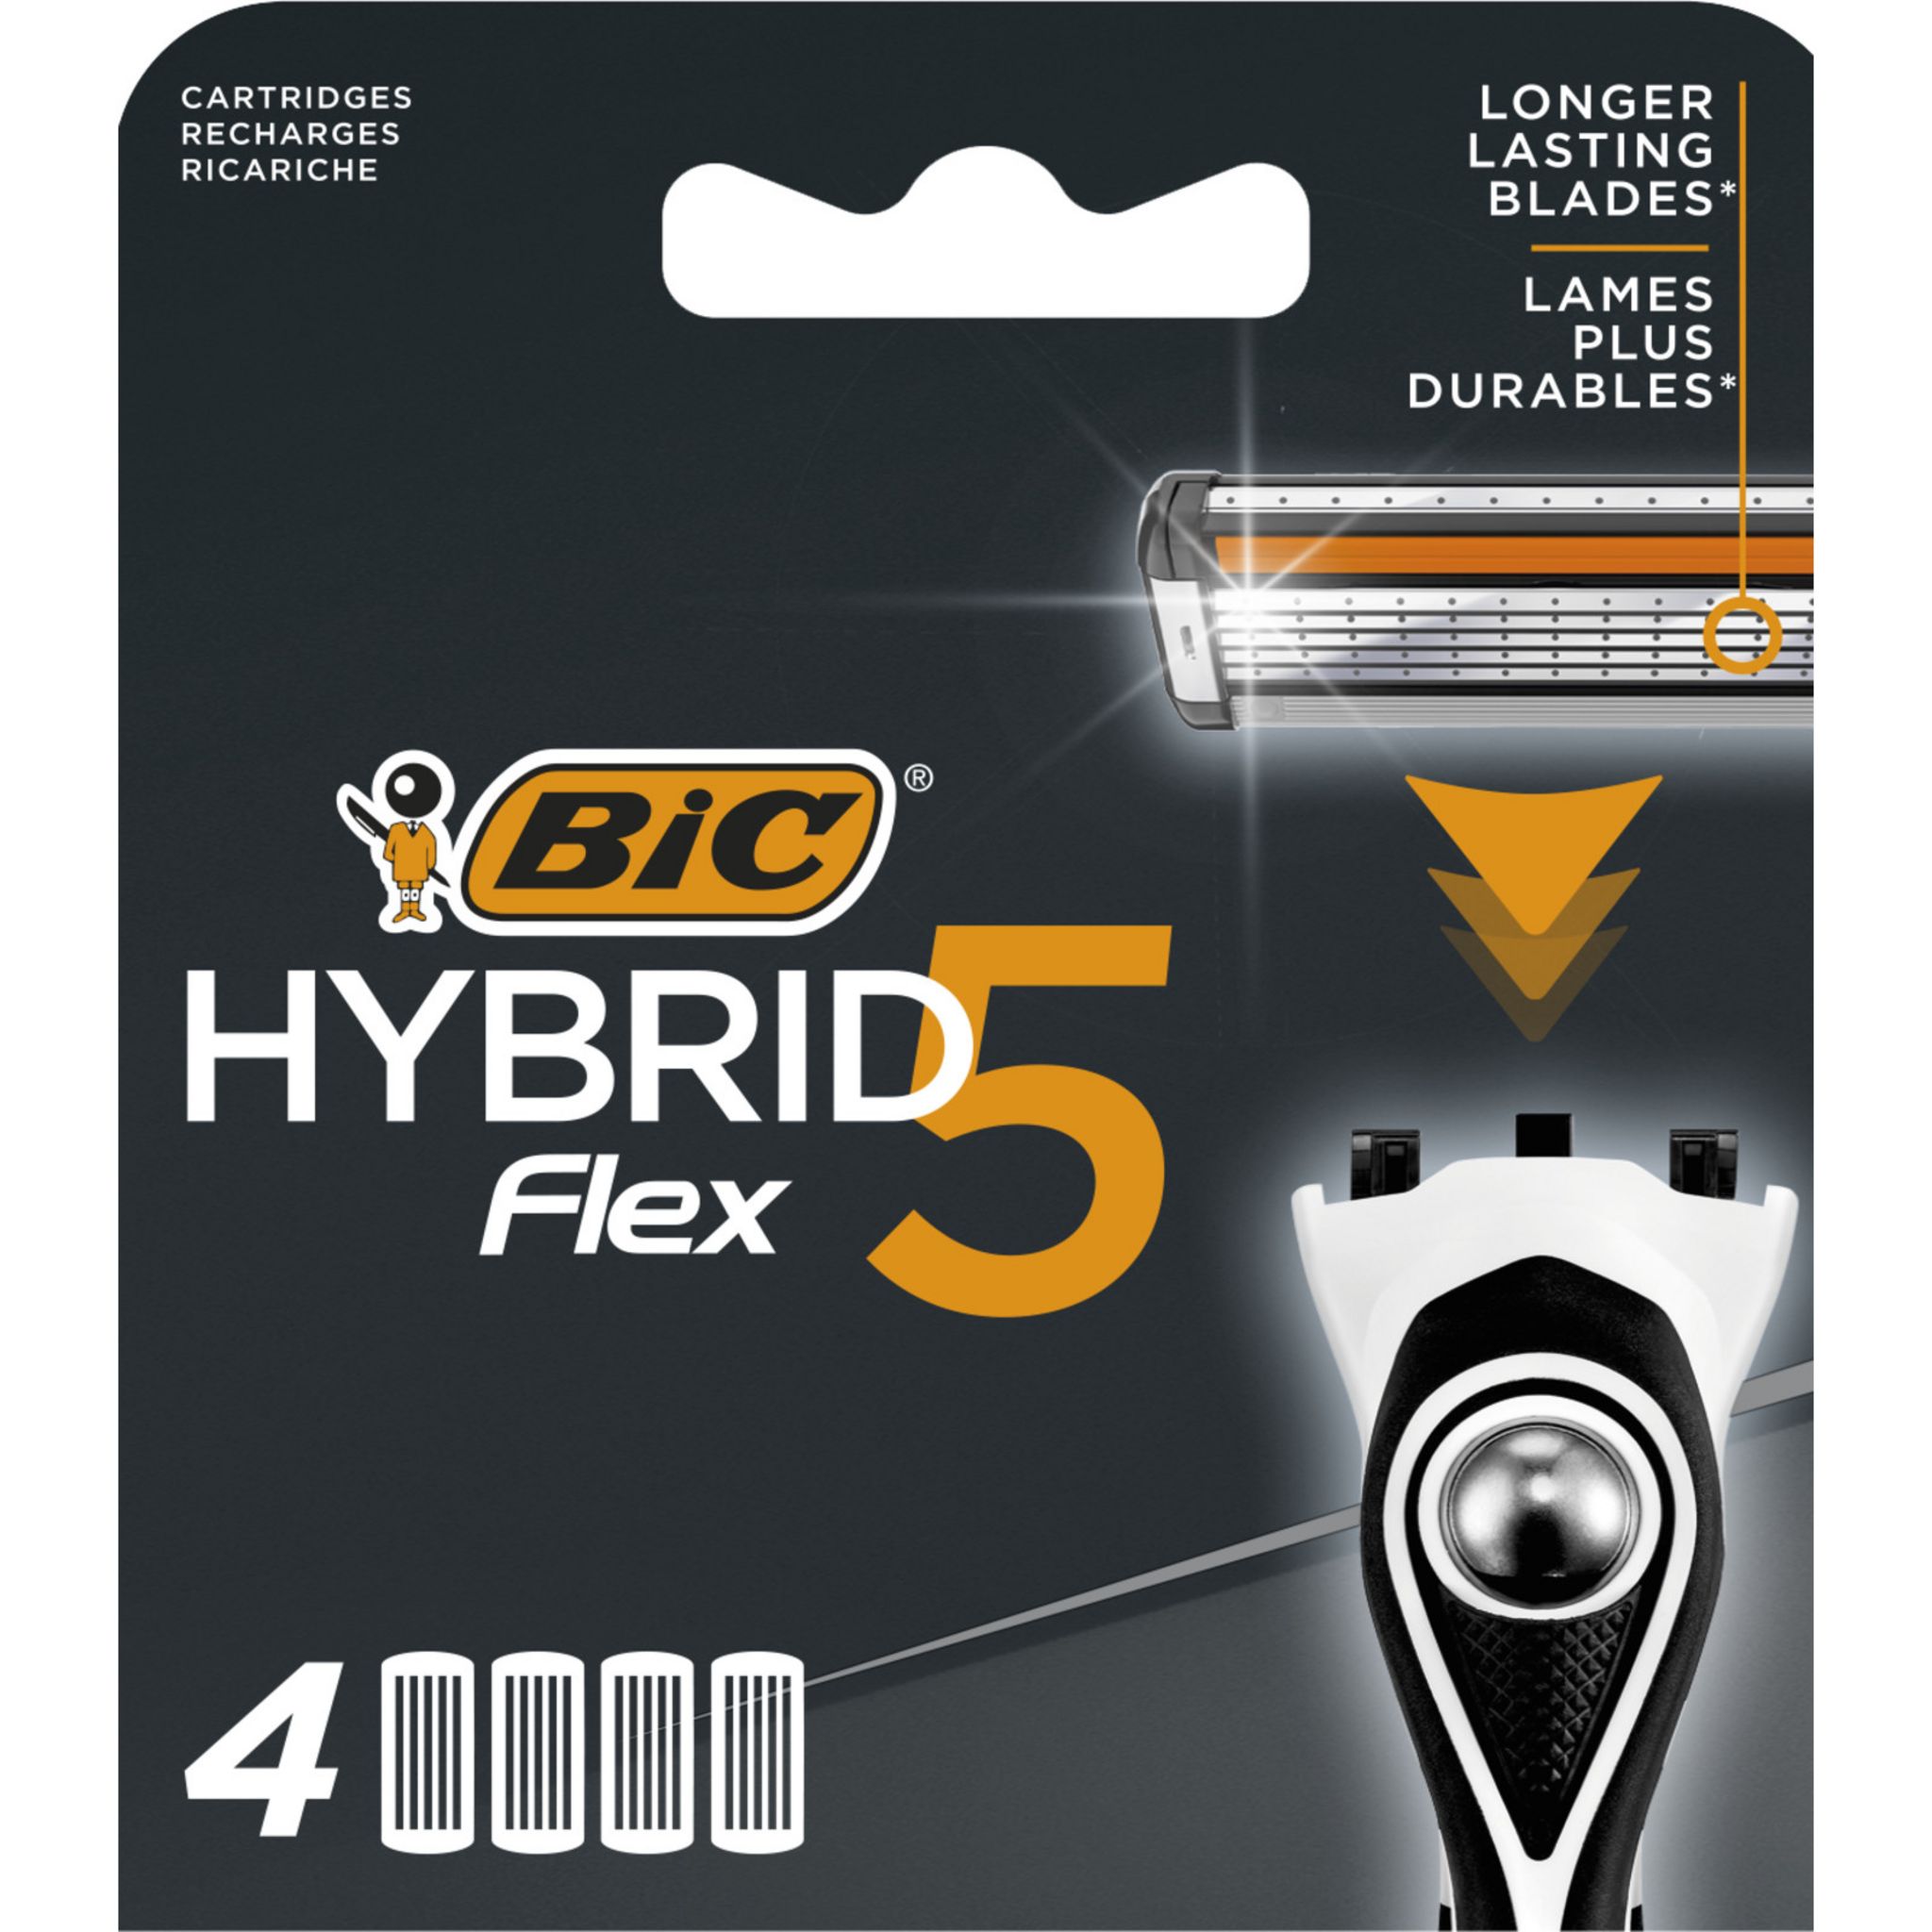 Bic flex hybrid купить. BIC Flex 5 Hybrid кассеты. Бритва BIC Flex 5 Hybrid. BIC Flex 3 Hybrid картриджи для бритвы. Сменные лнзвия для бритвы Биг Флекс.